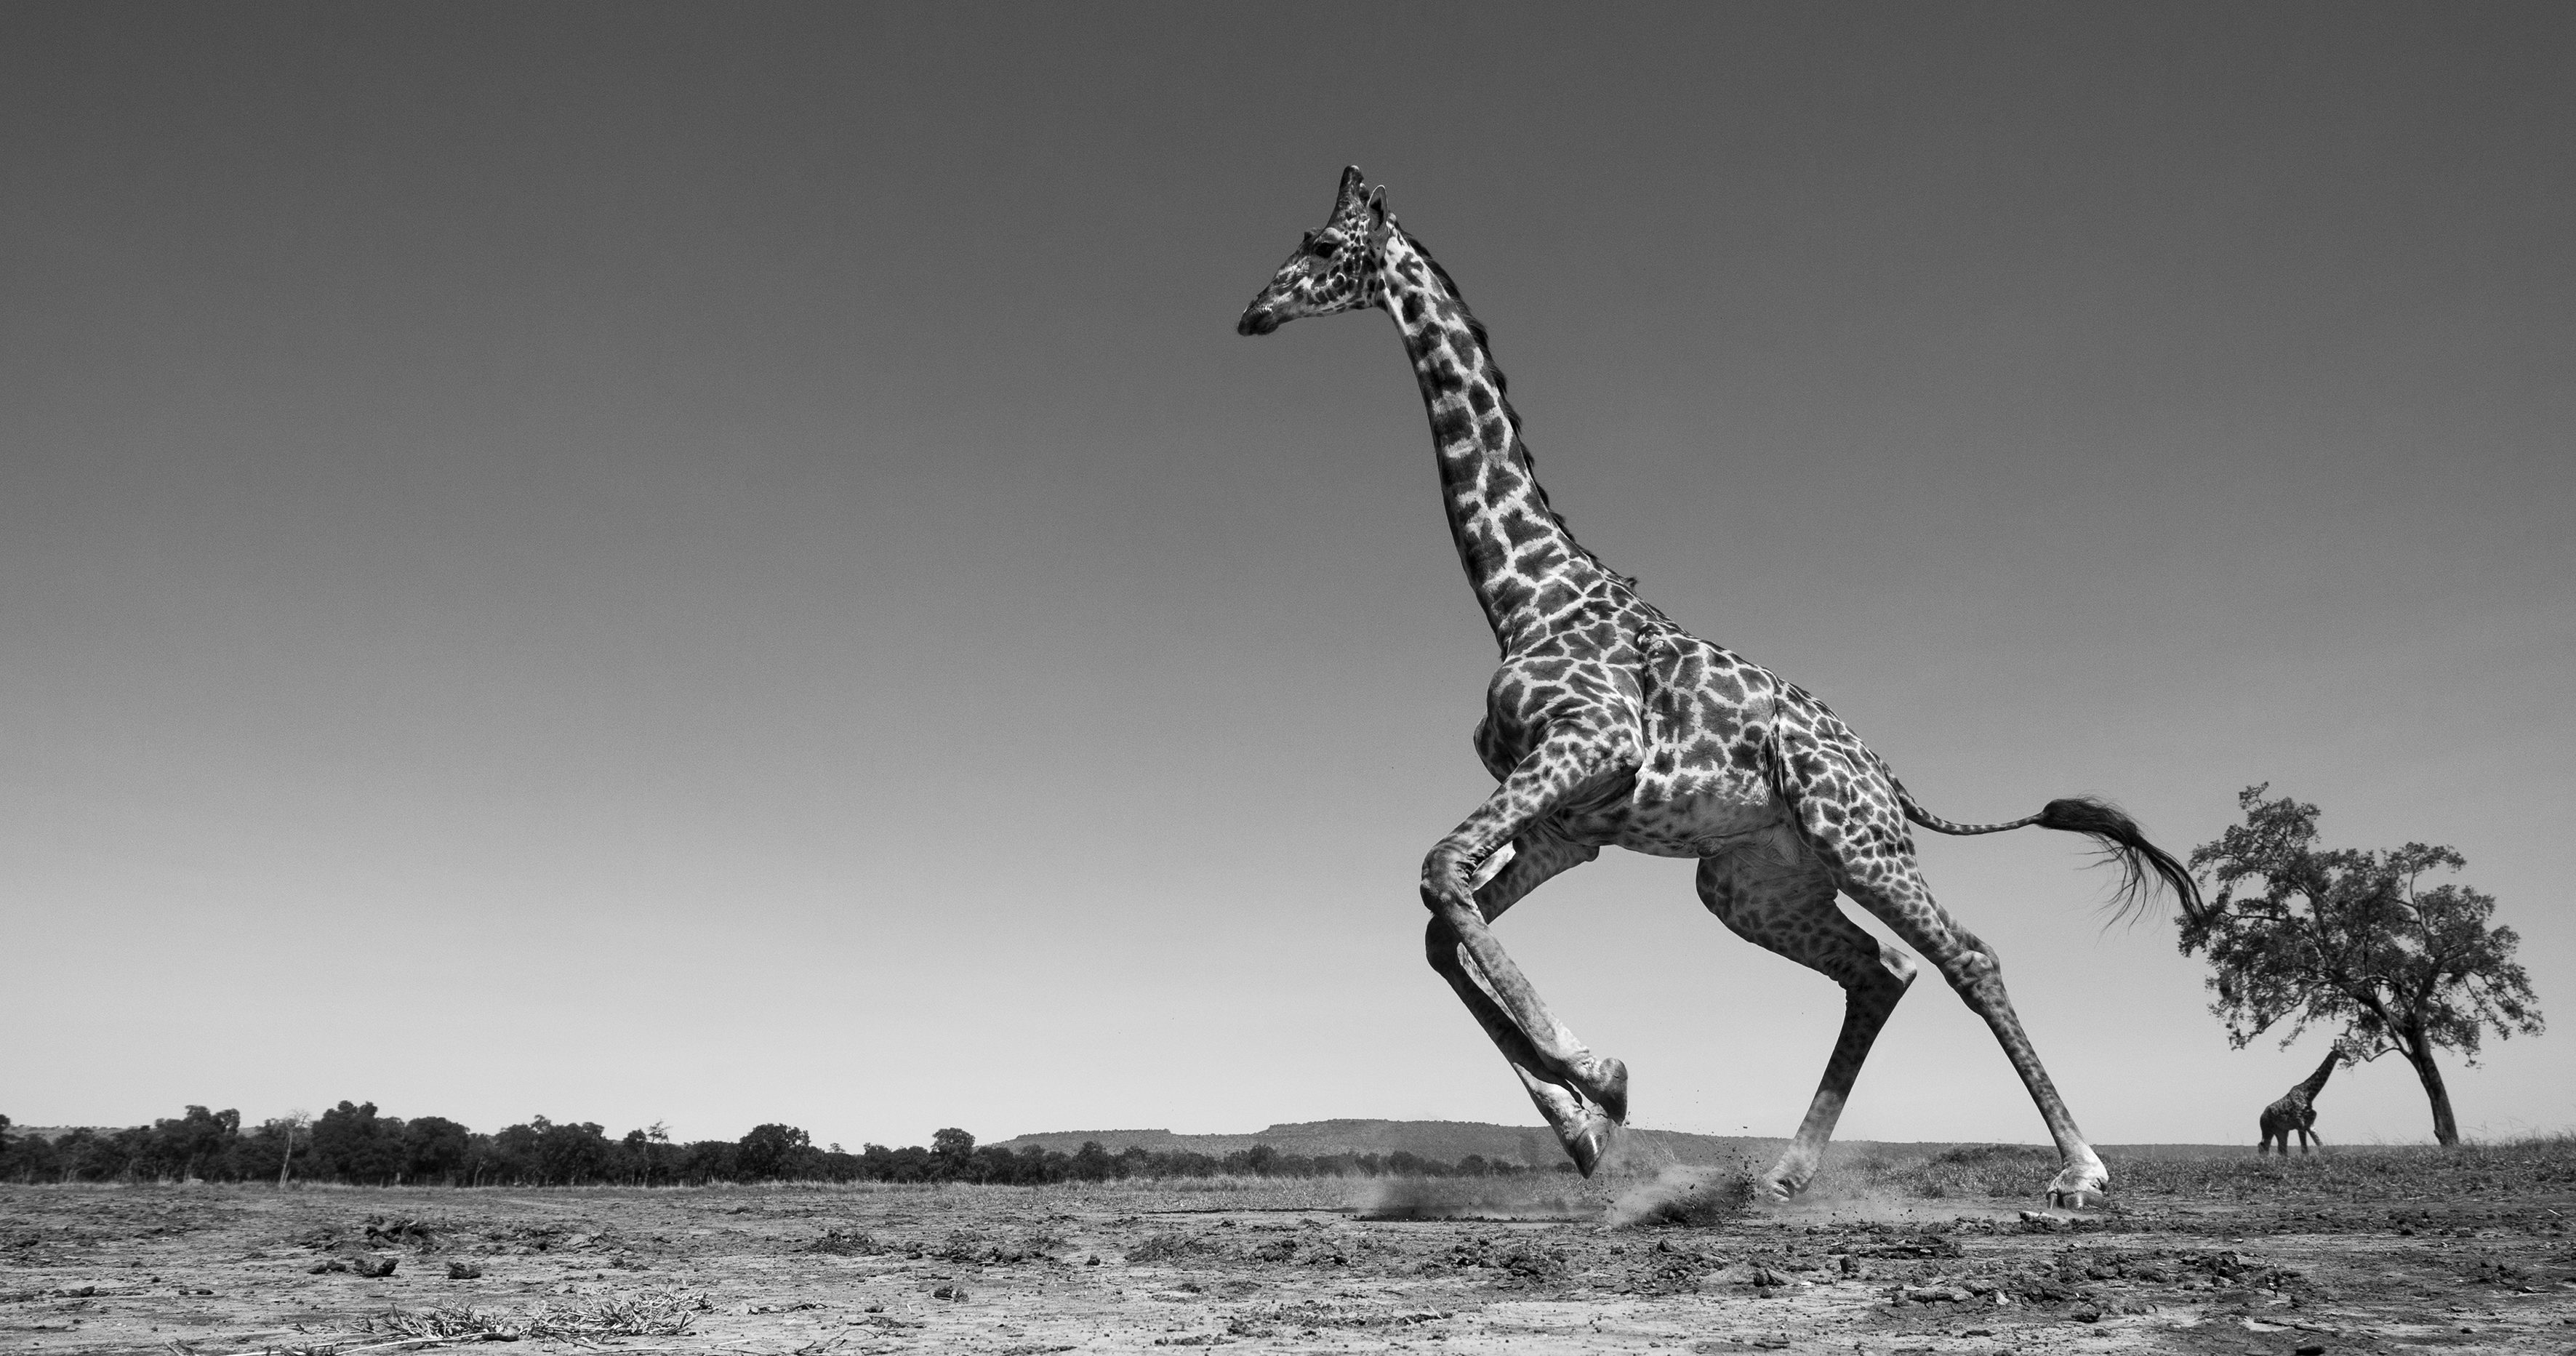 Maasai giraffe running away startled